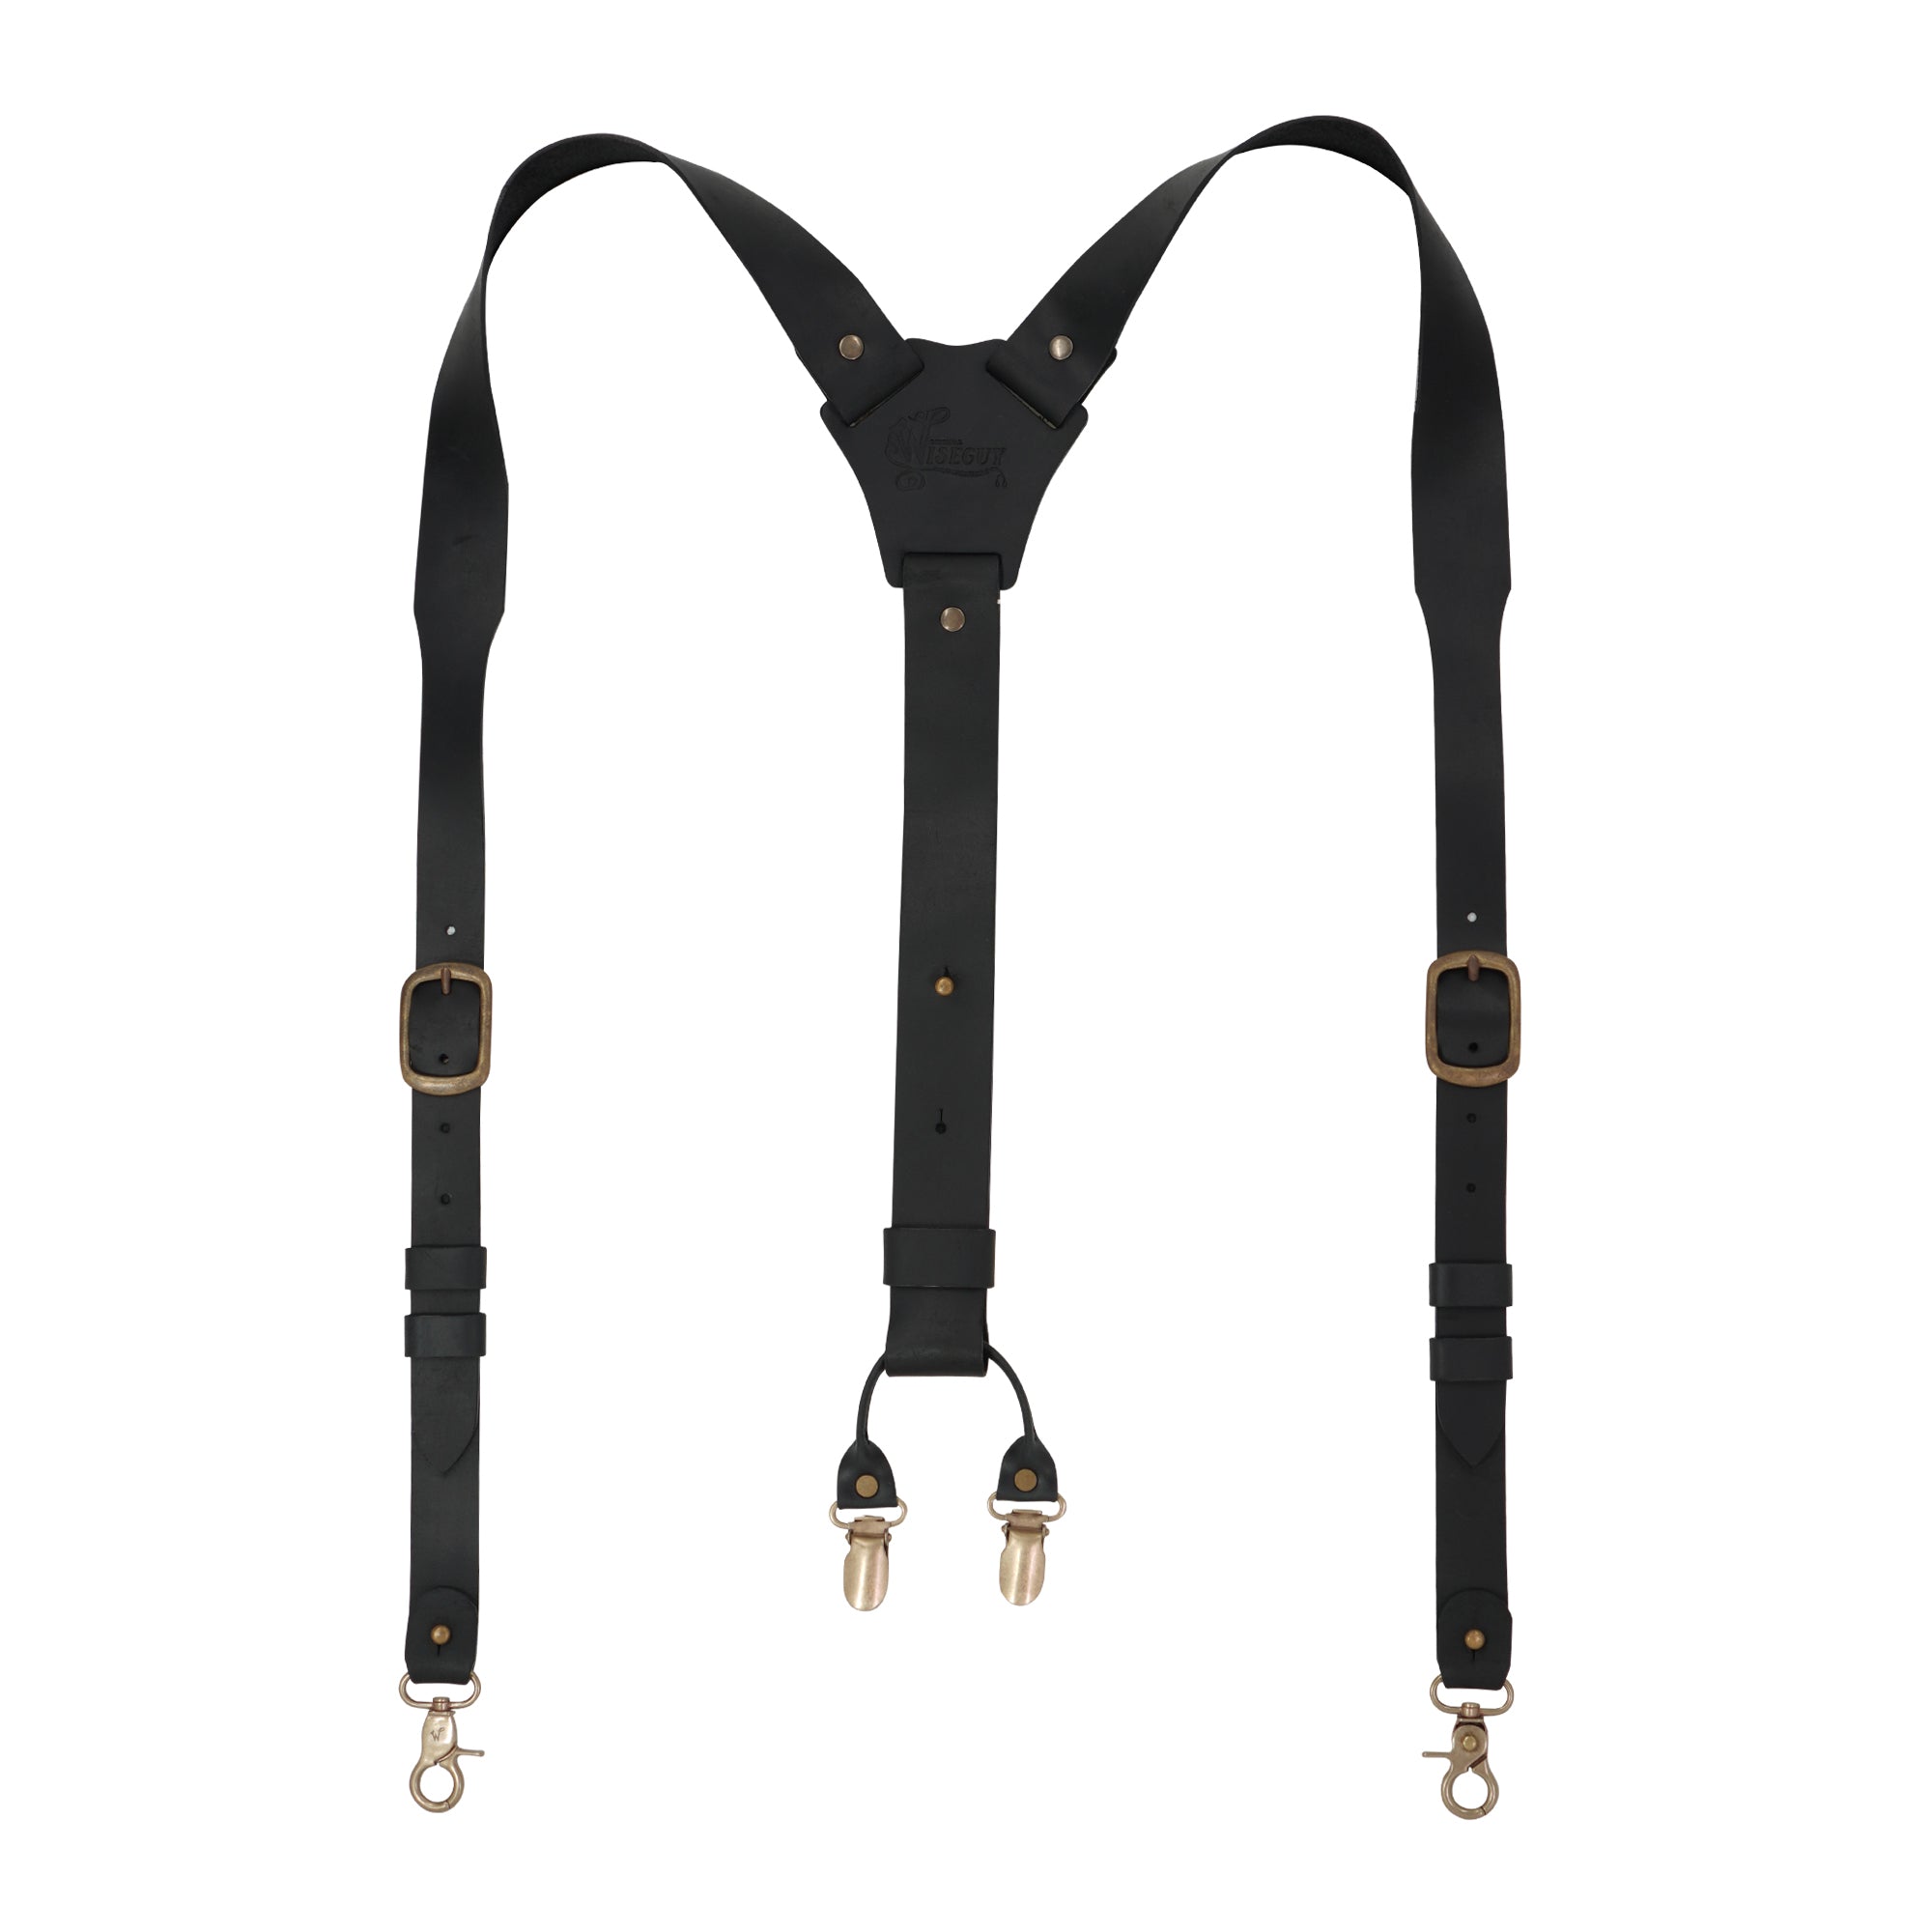 The Hershel Black Wide Suspenders No. L7014